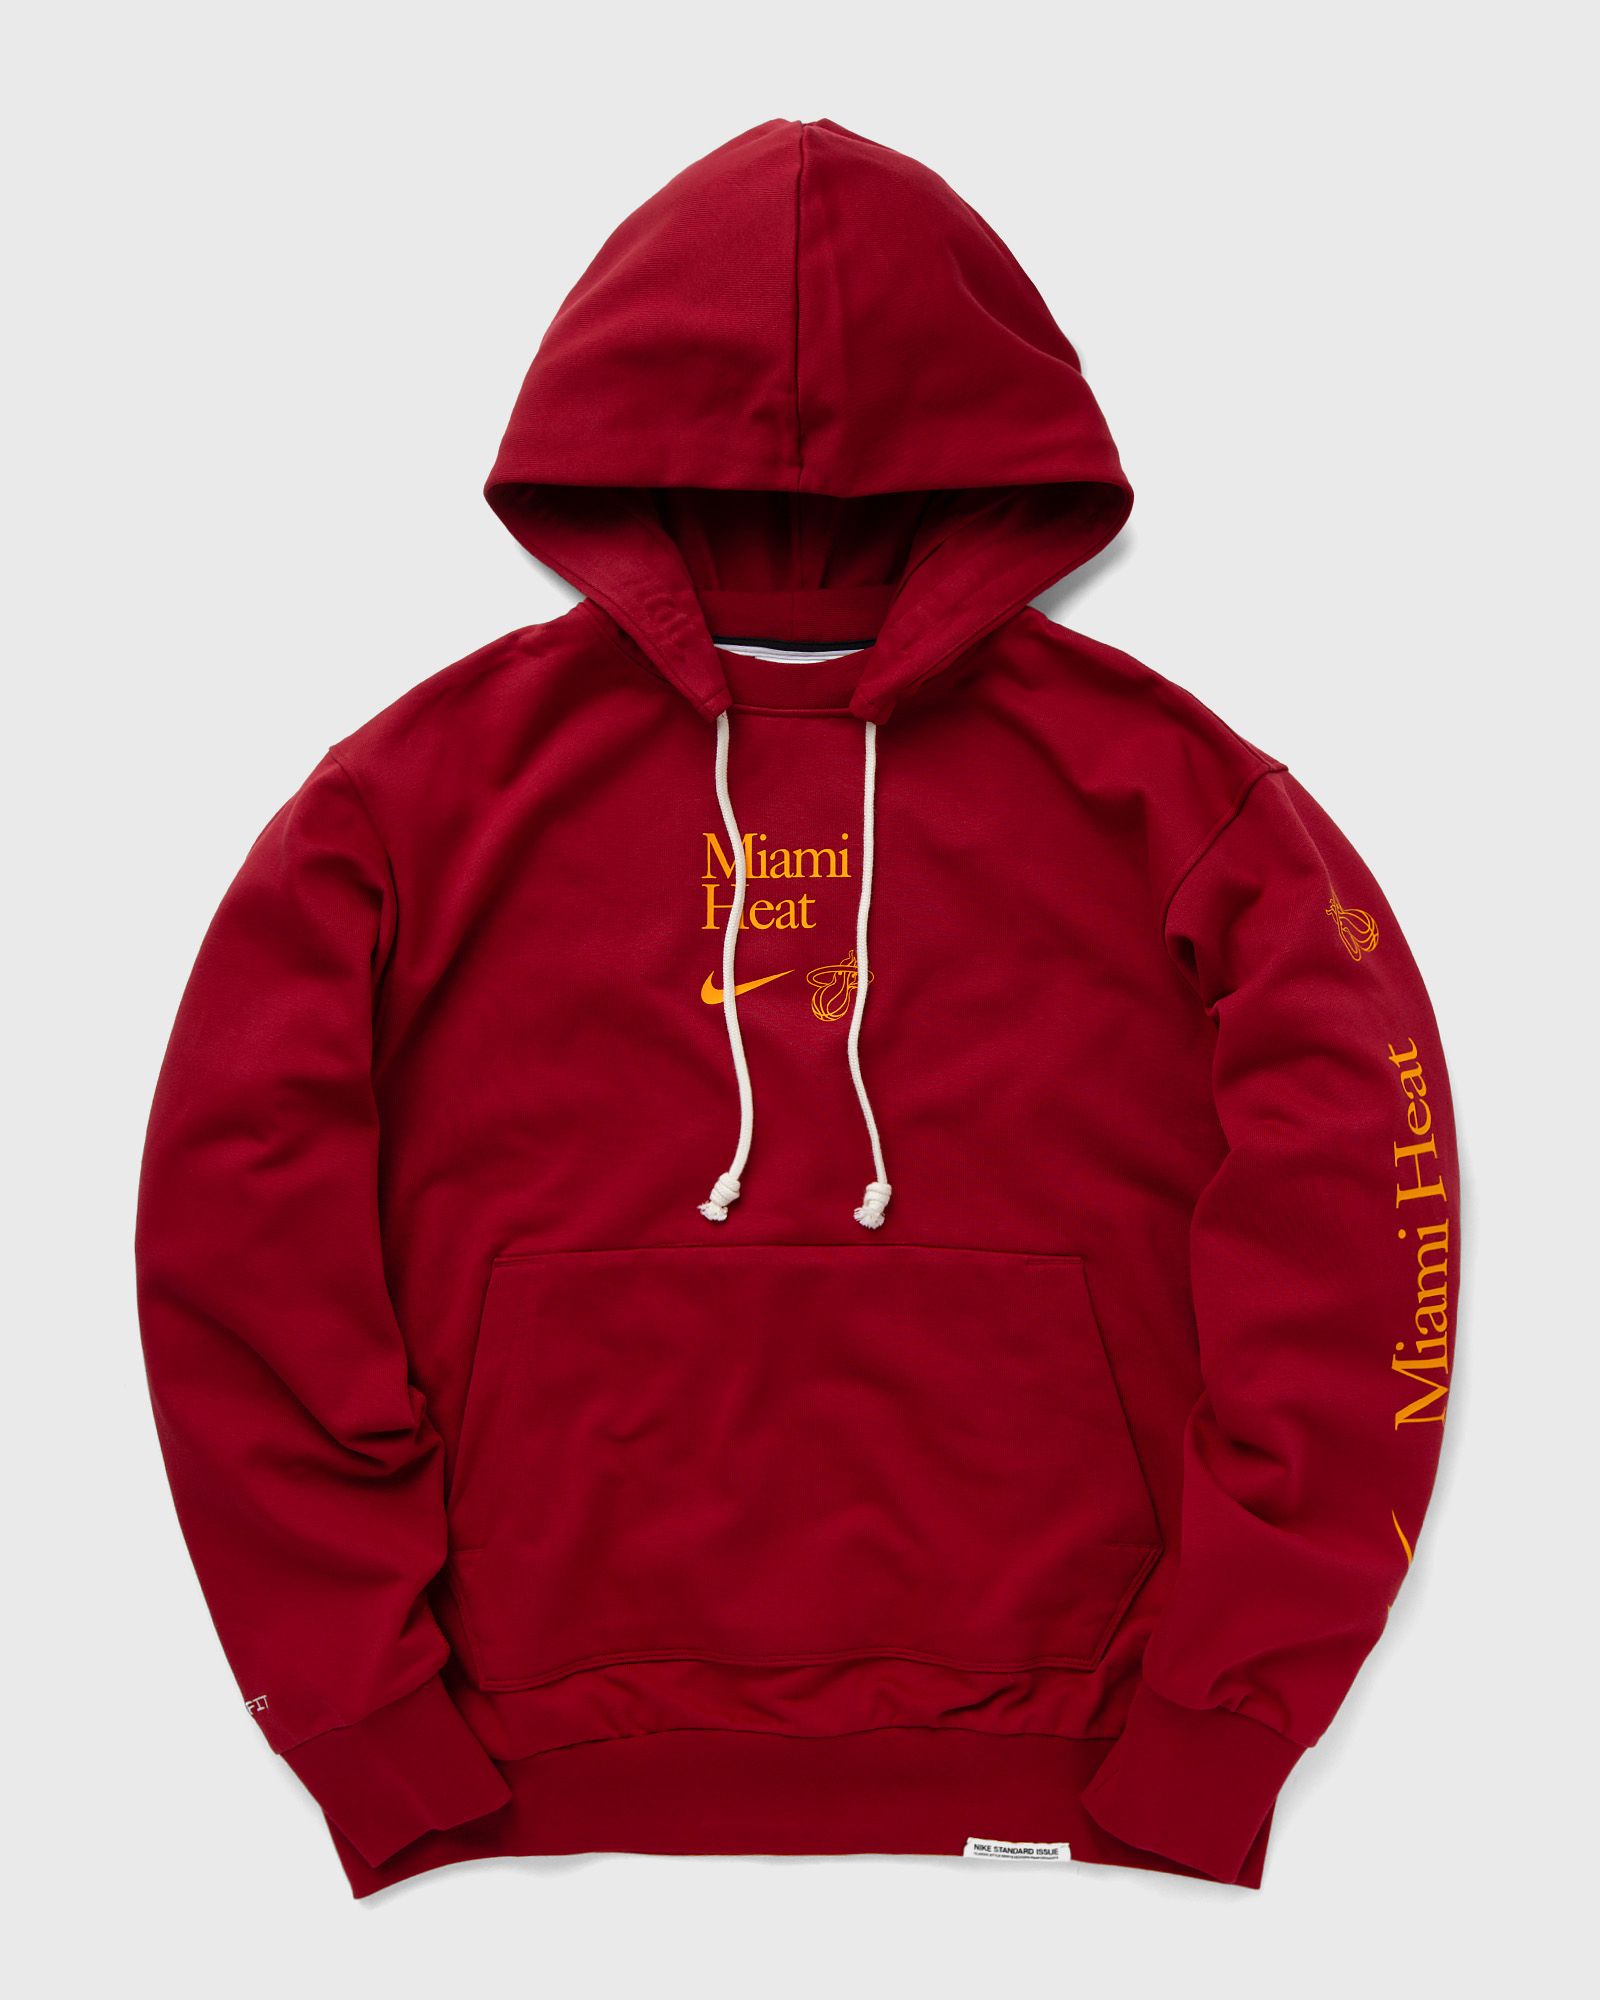 Nike - nba miami heat standard issue hoodie men hoodies|team sweats red in größe:xxl